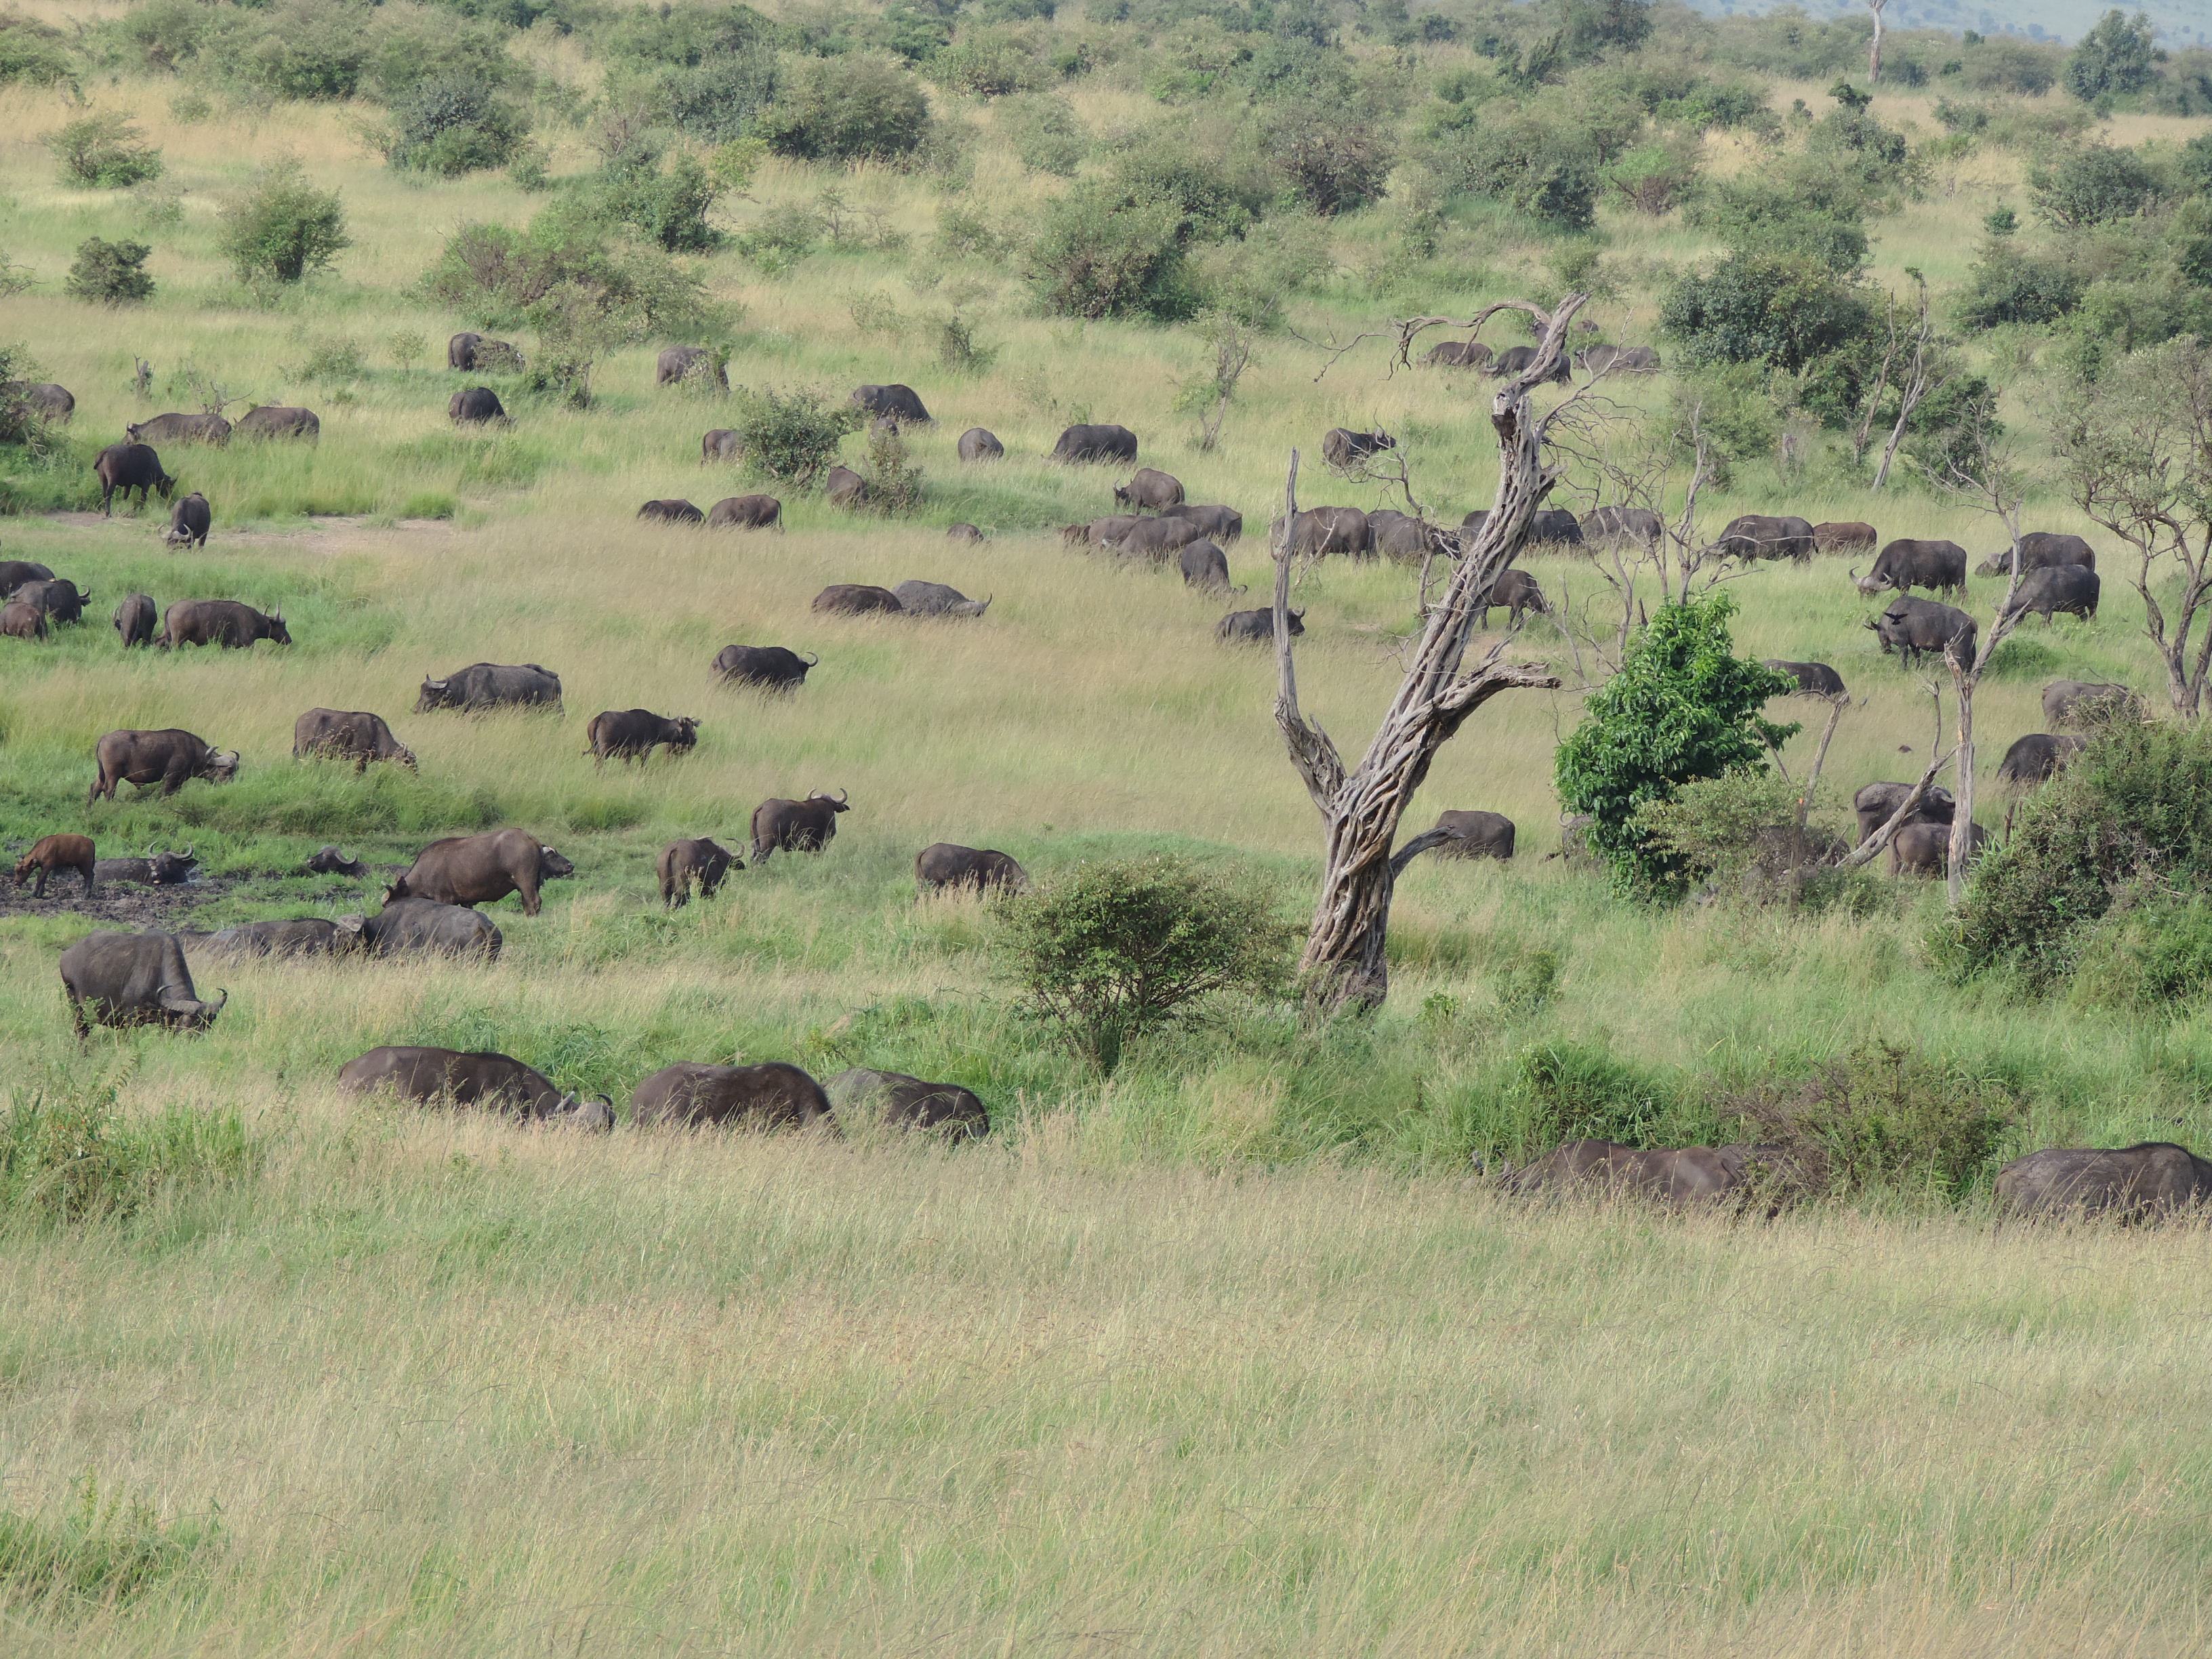 Active Kenya Adventure Safaris, YHA Kenya Travel,Masai Mara Budget Tours.